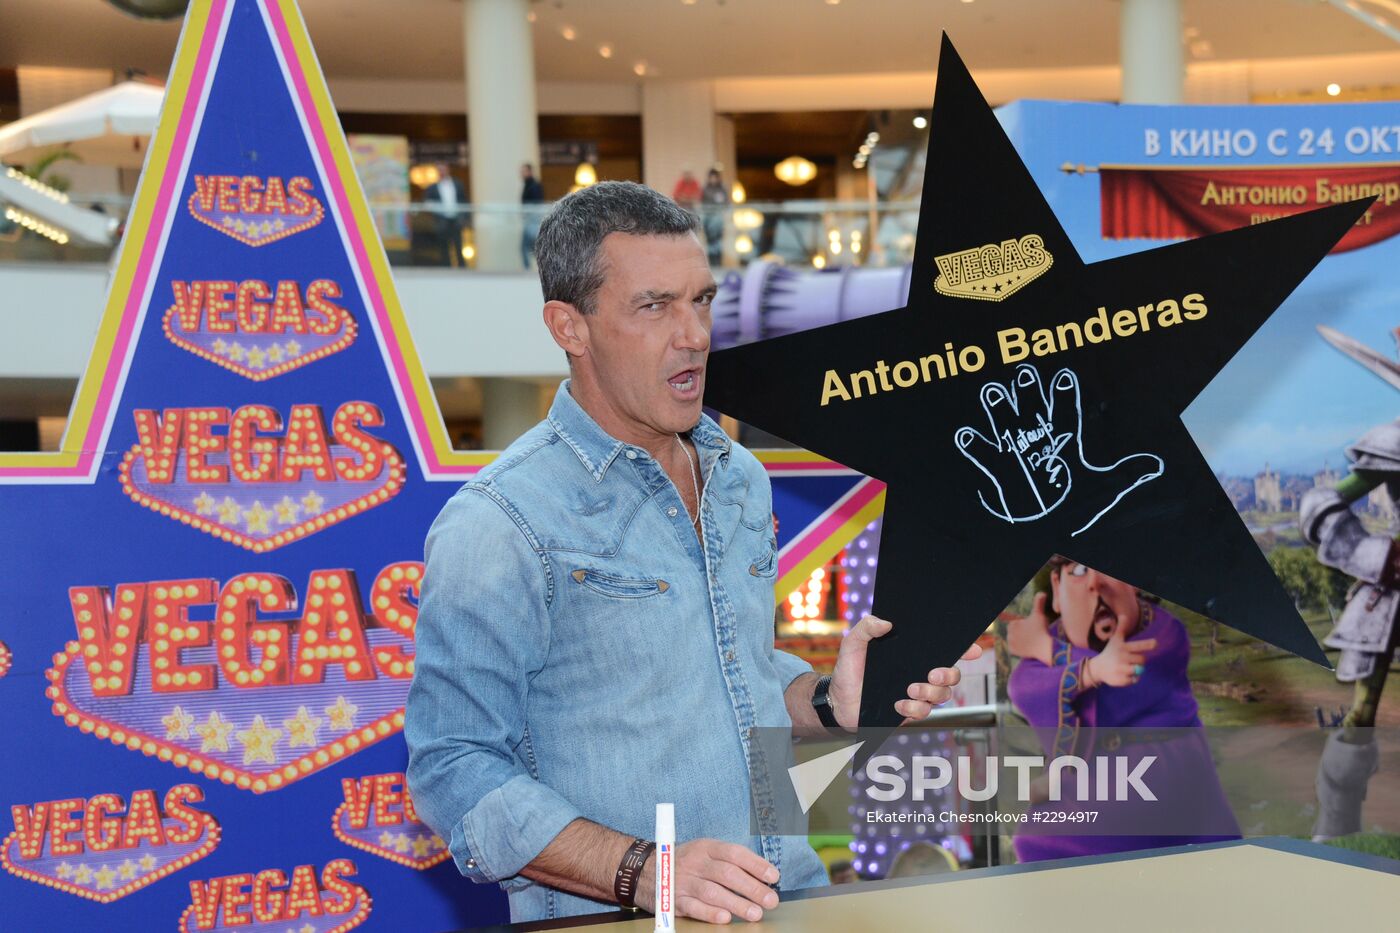 Ceremony of laying Antonio Banderas star of fame